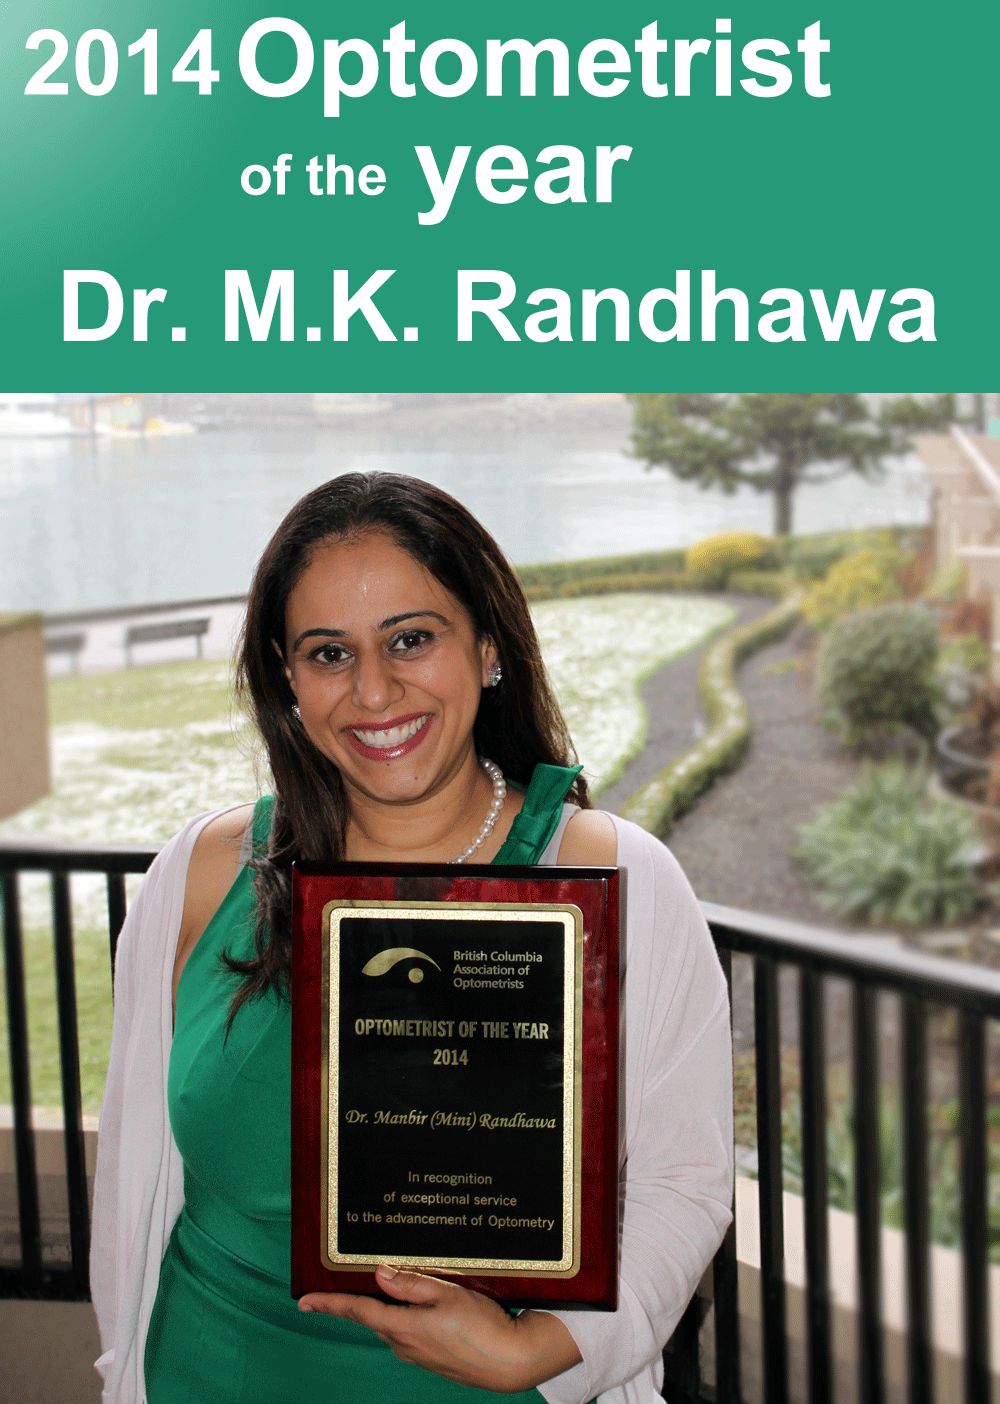 Dr. M.K. Randhawa, Optometrist of the year